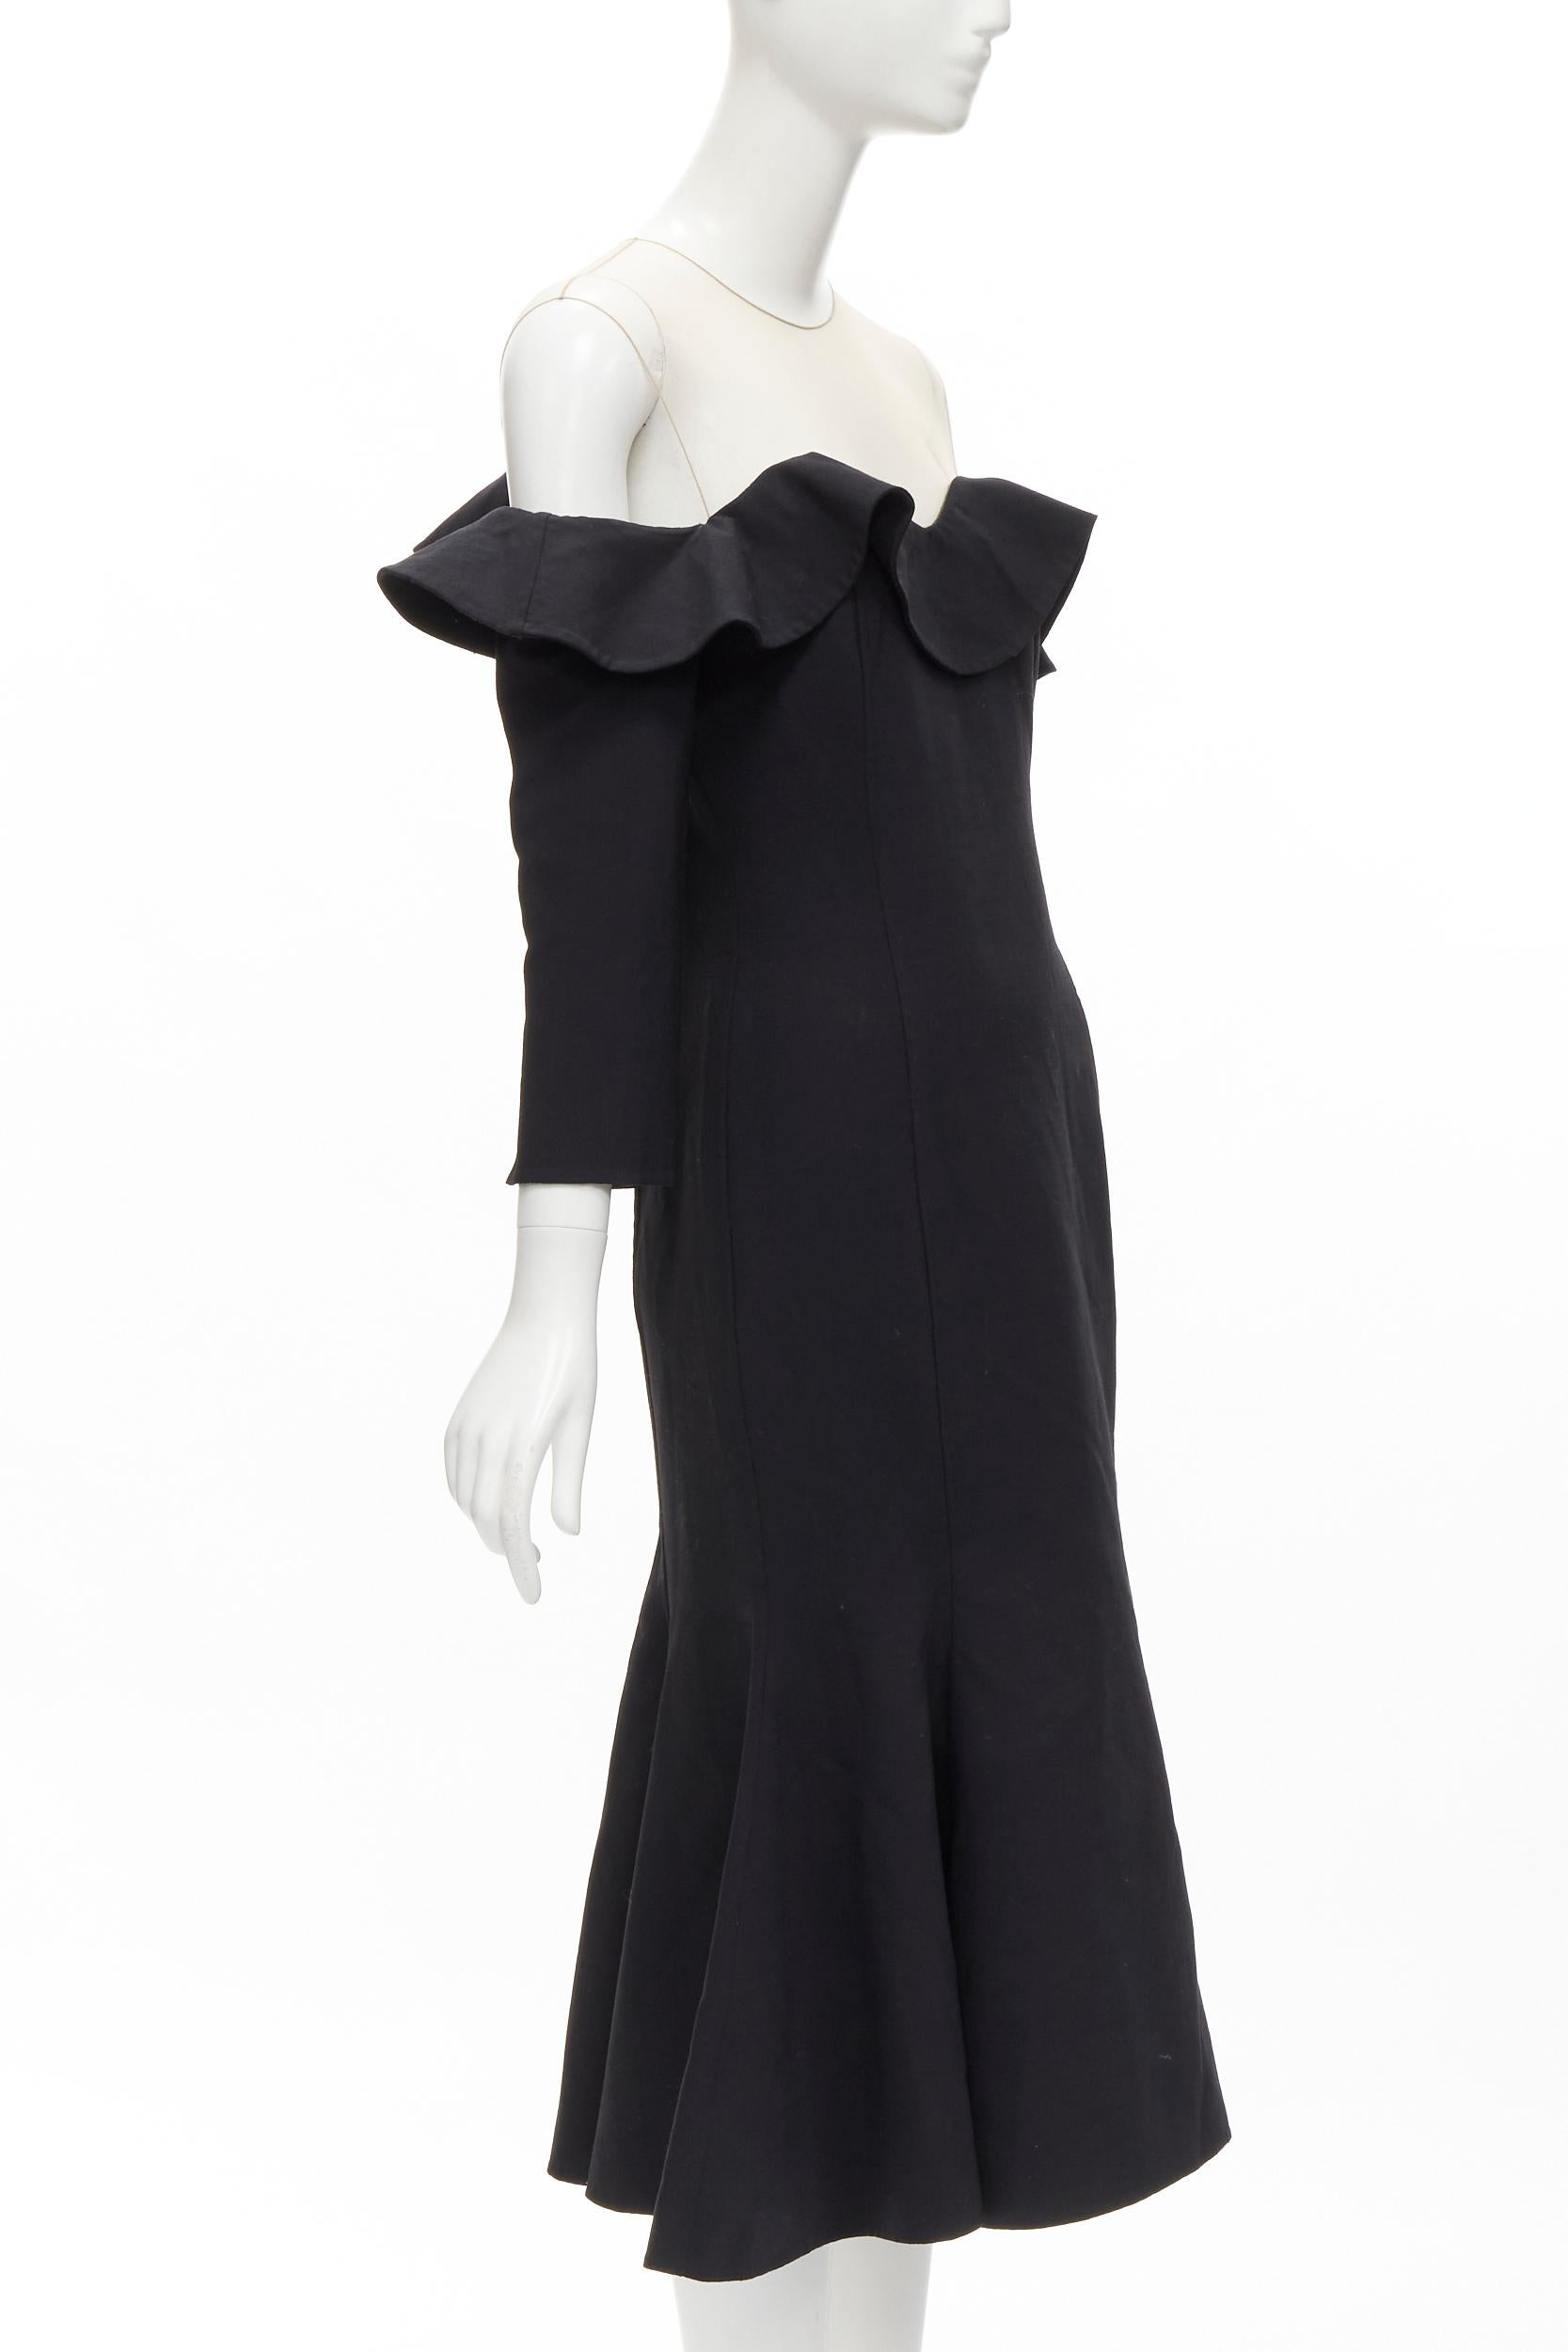 Black OSCAR DE LA RENTA 2018 sheer yoke ruffle off shoulder flute skirt dress US6 S For Sale